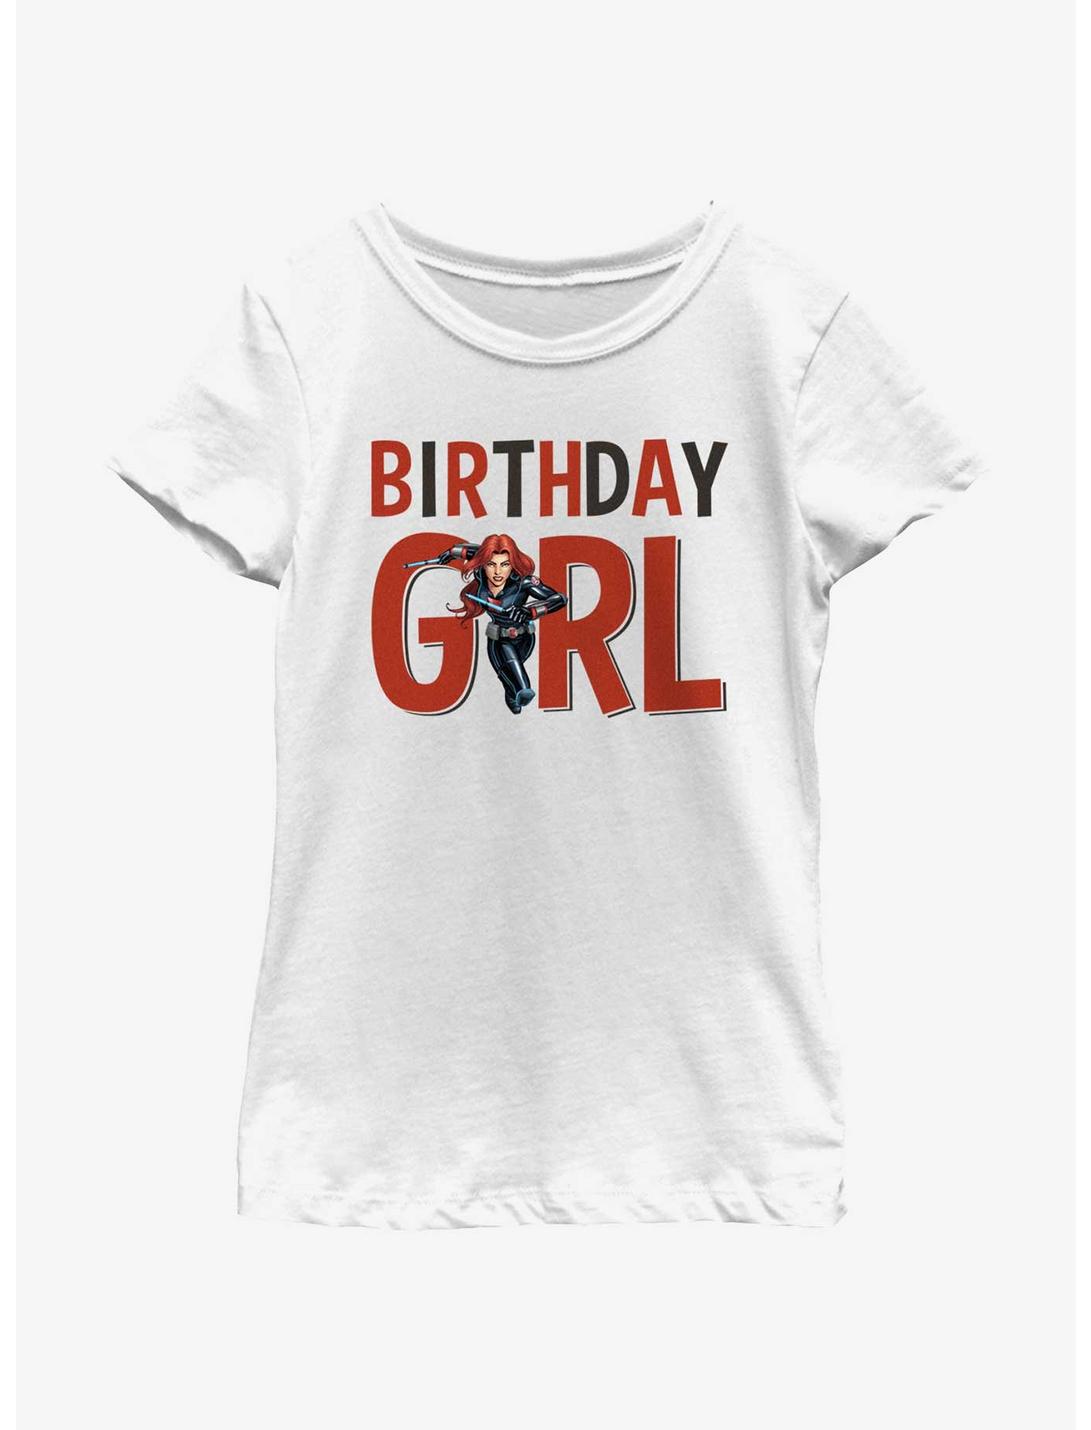 Marvel Avengers Birthday Girl Black Widow Youth Girls T-Shirt, WHITE, hi-res